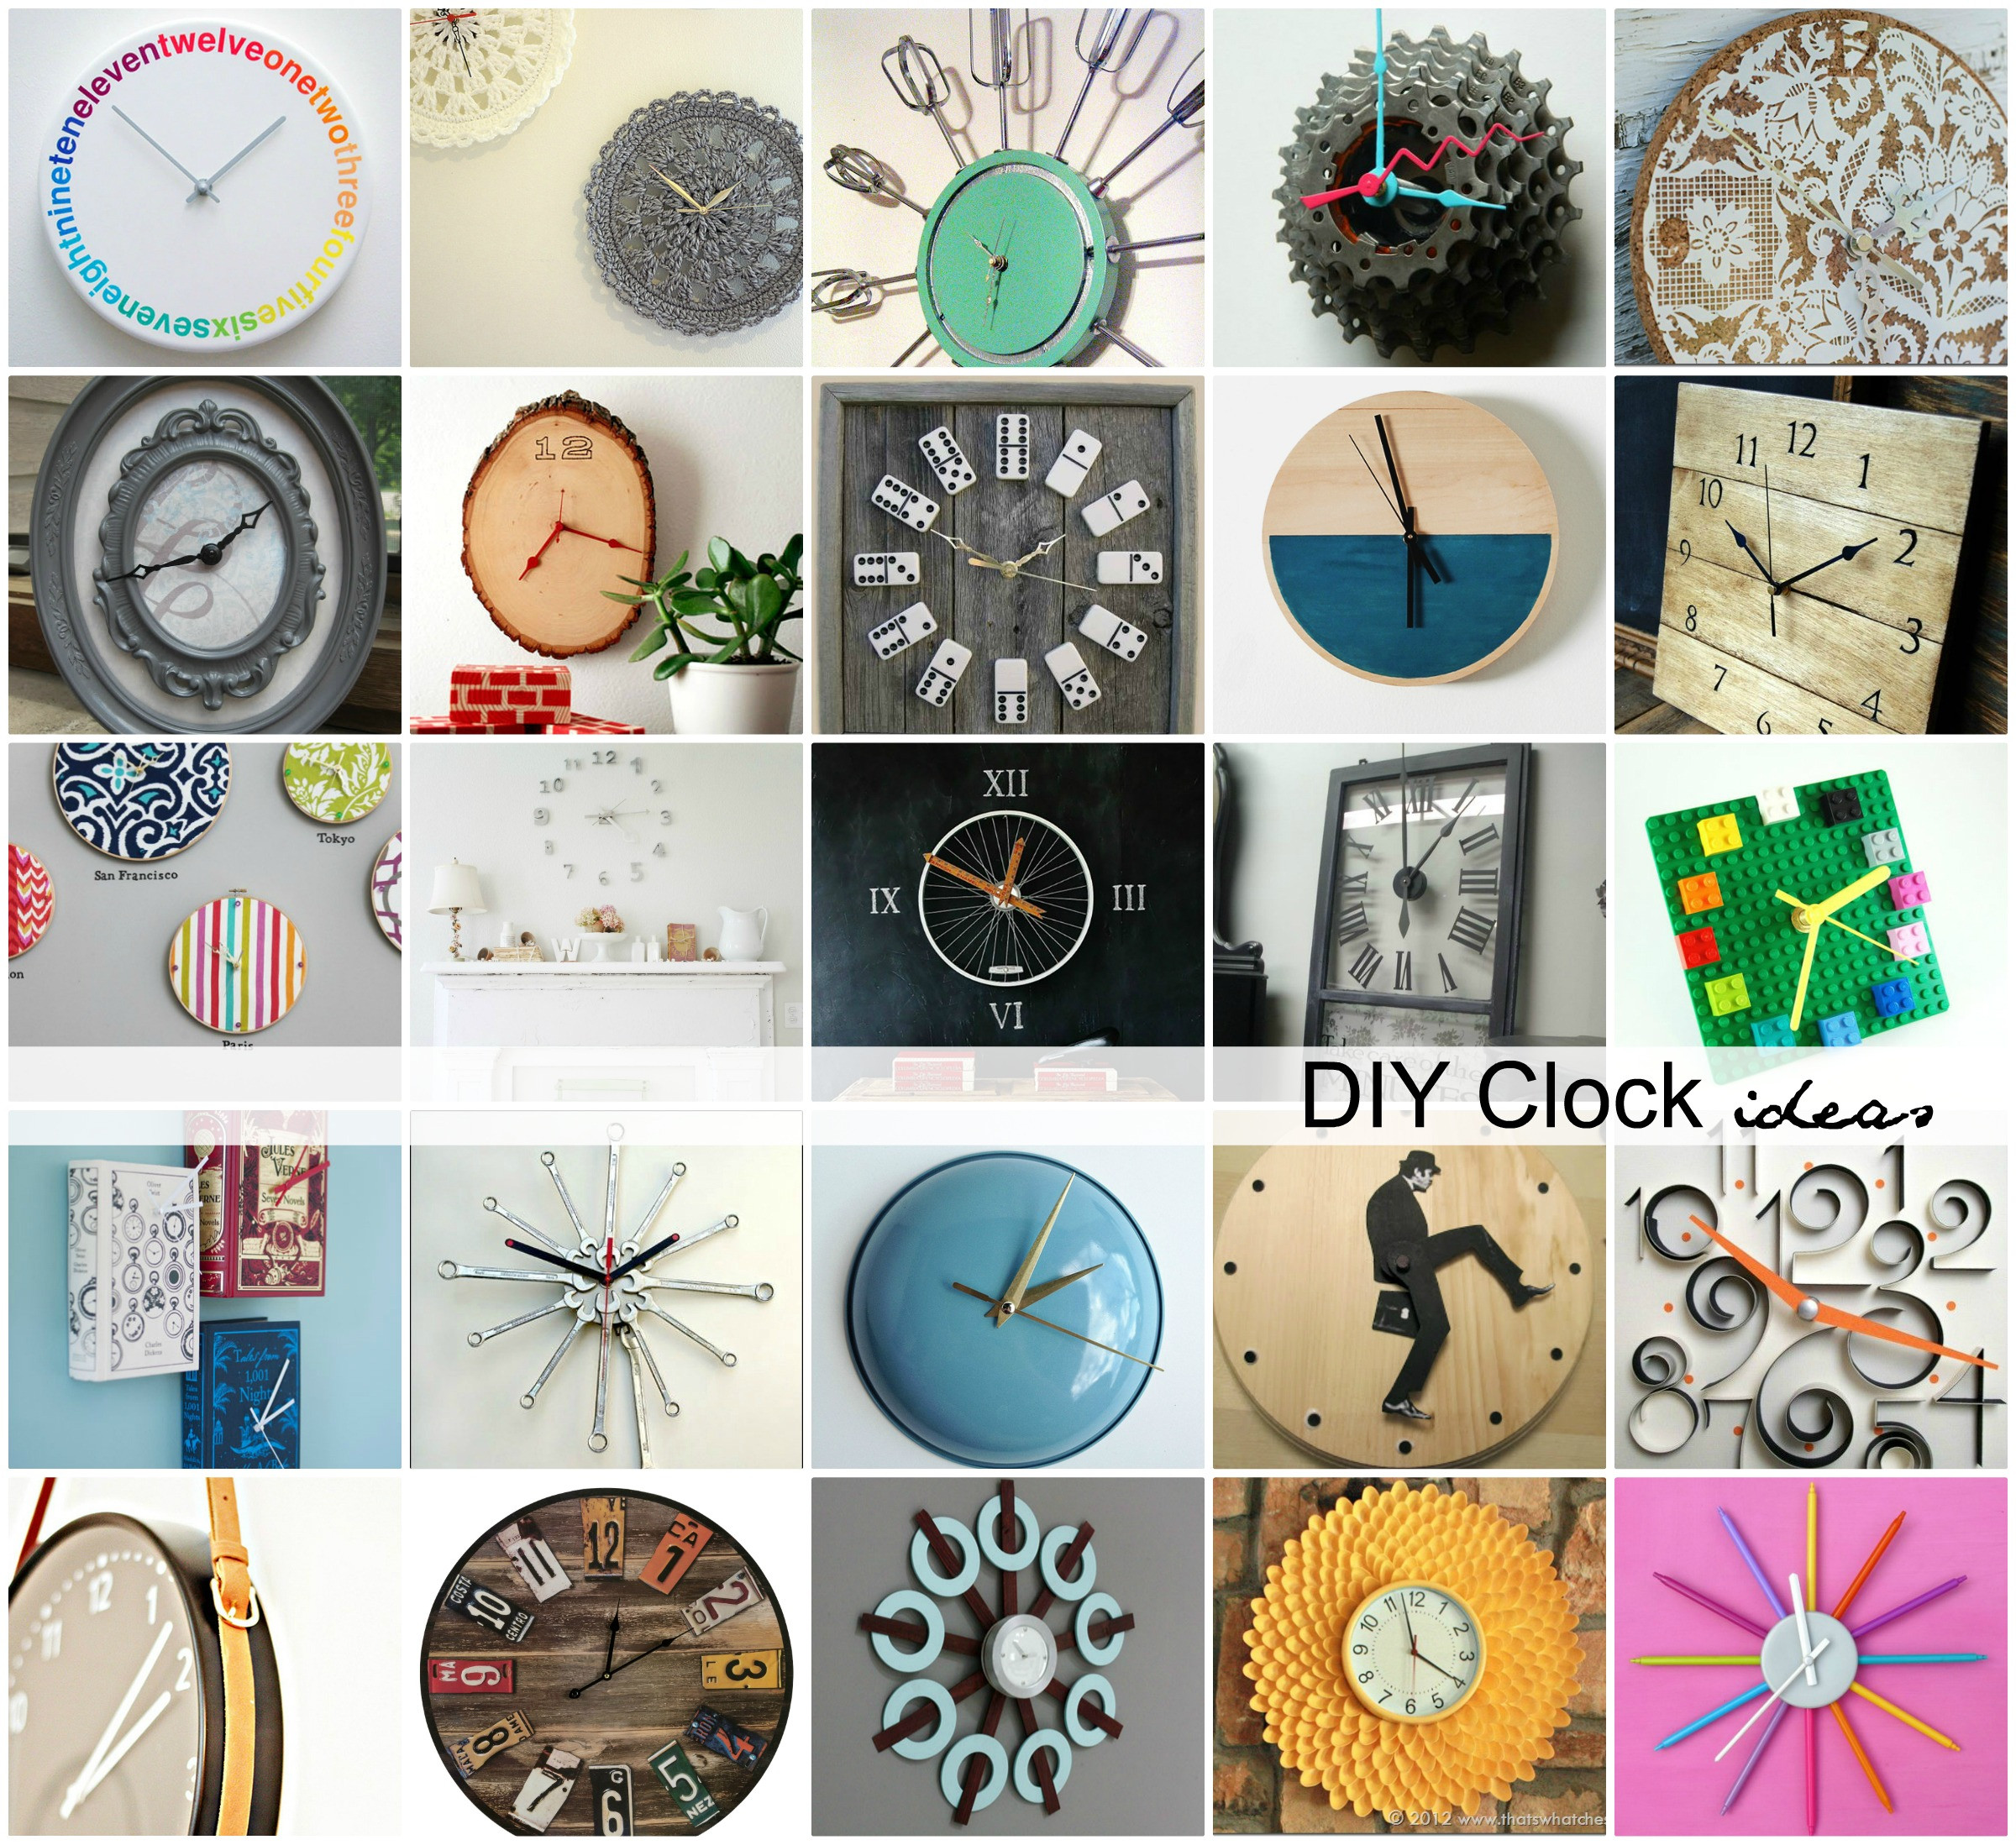 Best ideas about DIY Clock Ideas
. Save or Pin DIY Clock Ideas The Idea Room Now.